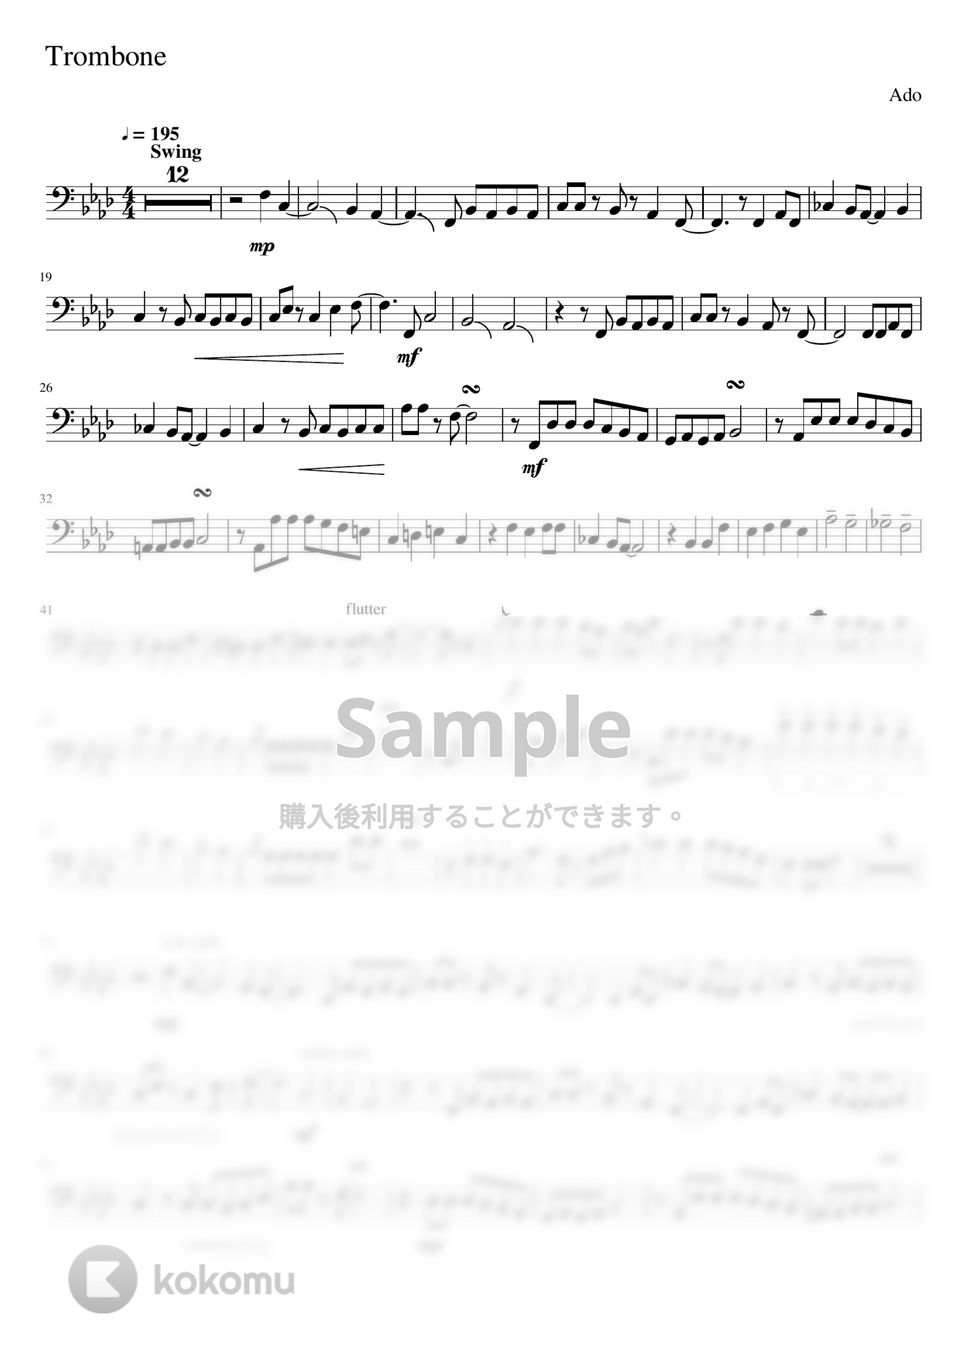 Ado - レディメイド (-Trombone Solo- 原キー) by Creampuff